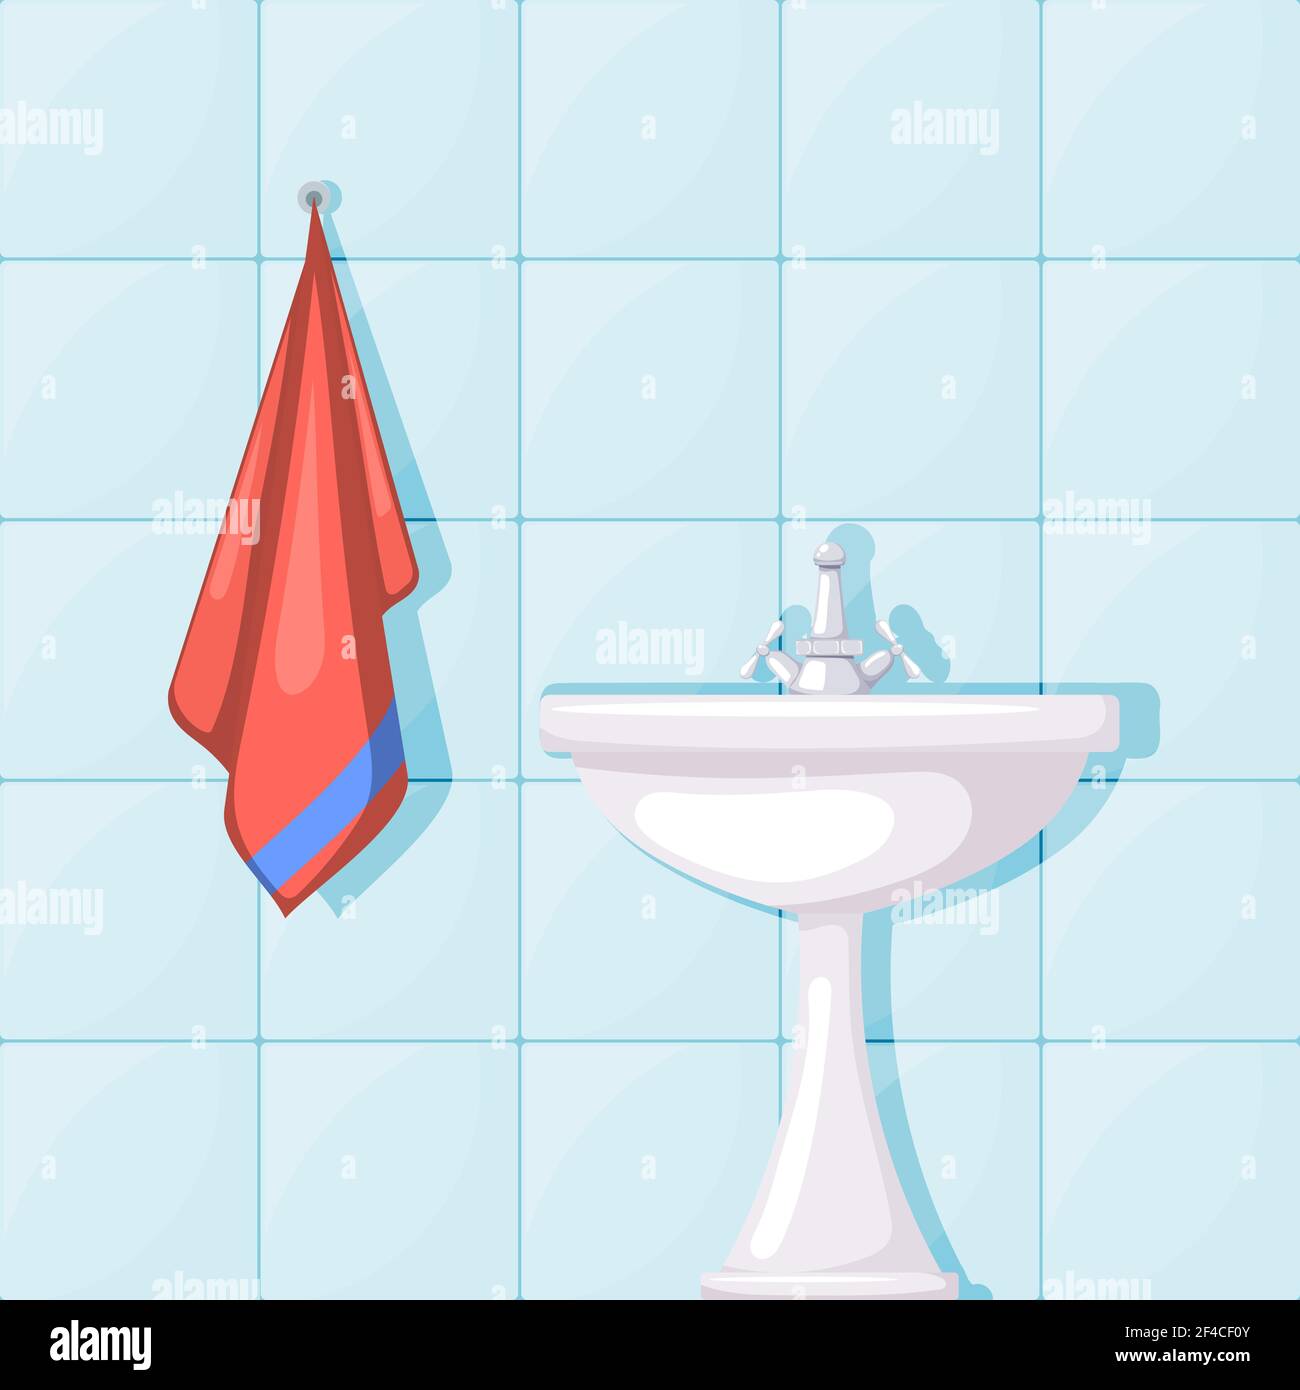 Vector illustration of bathroom ceramic wash basin, tiled walls and red towel. Cartoon style. Furnishings bathroom Stock Vector